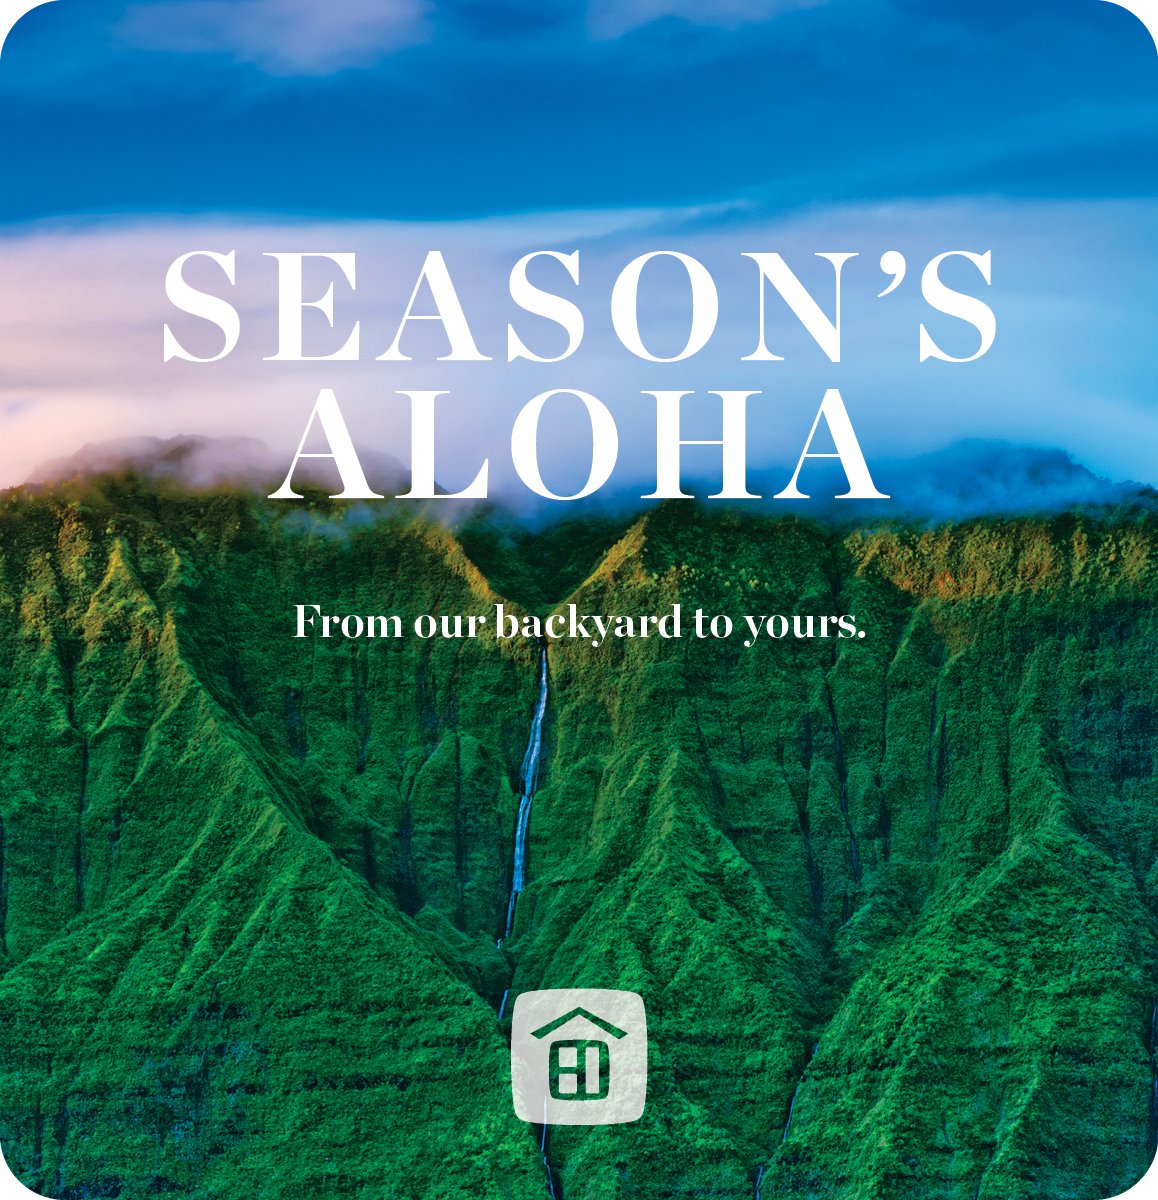 Season's Aloha - Mountains